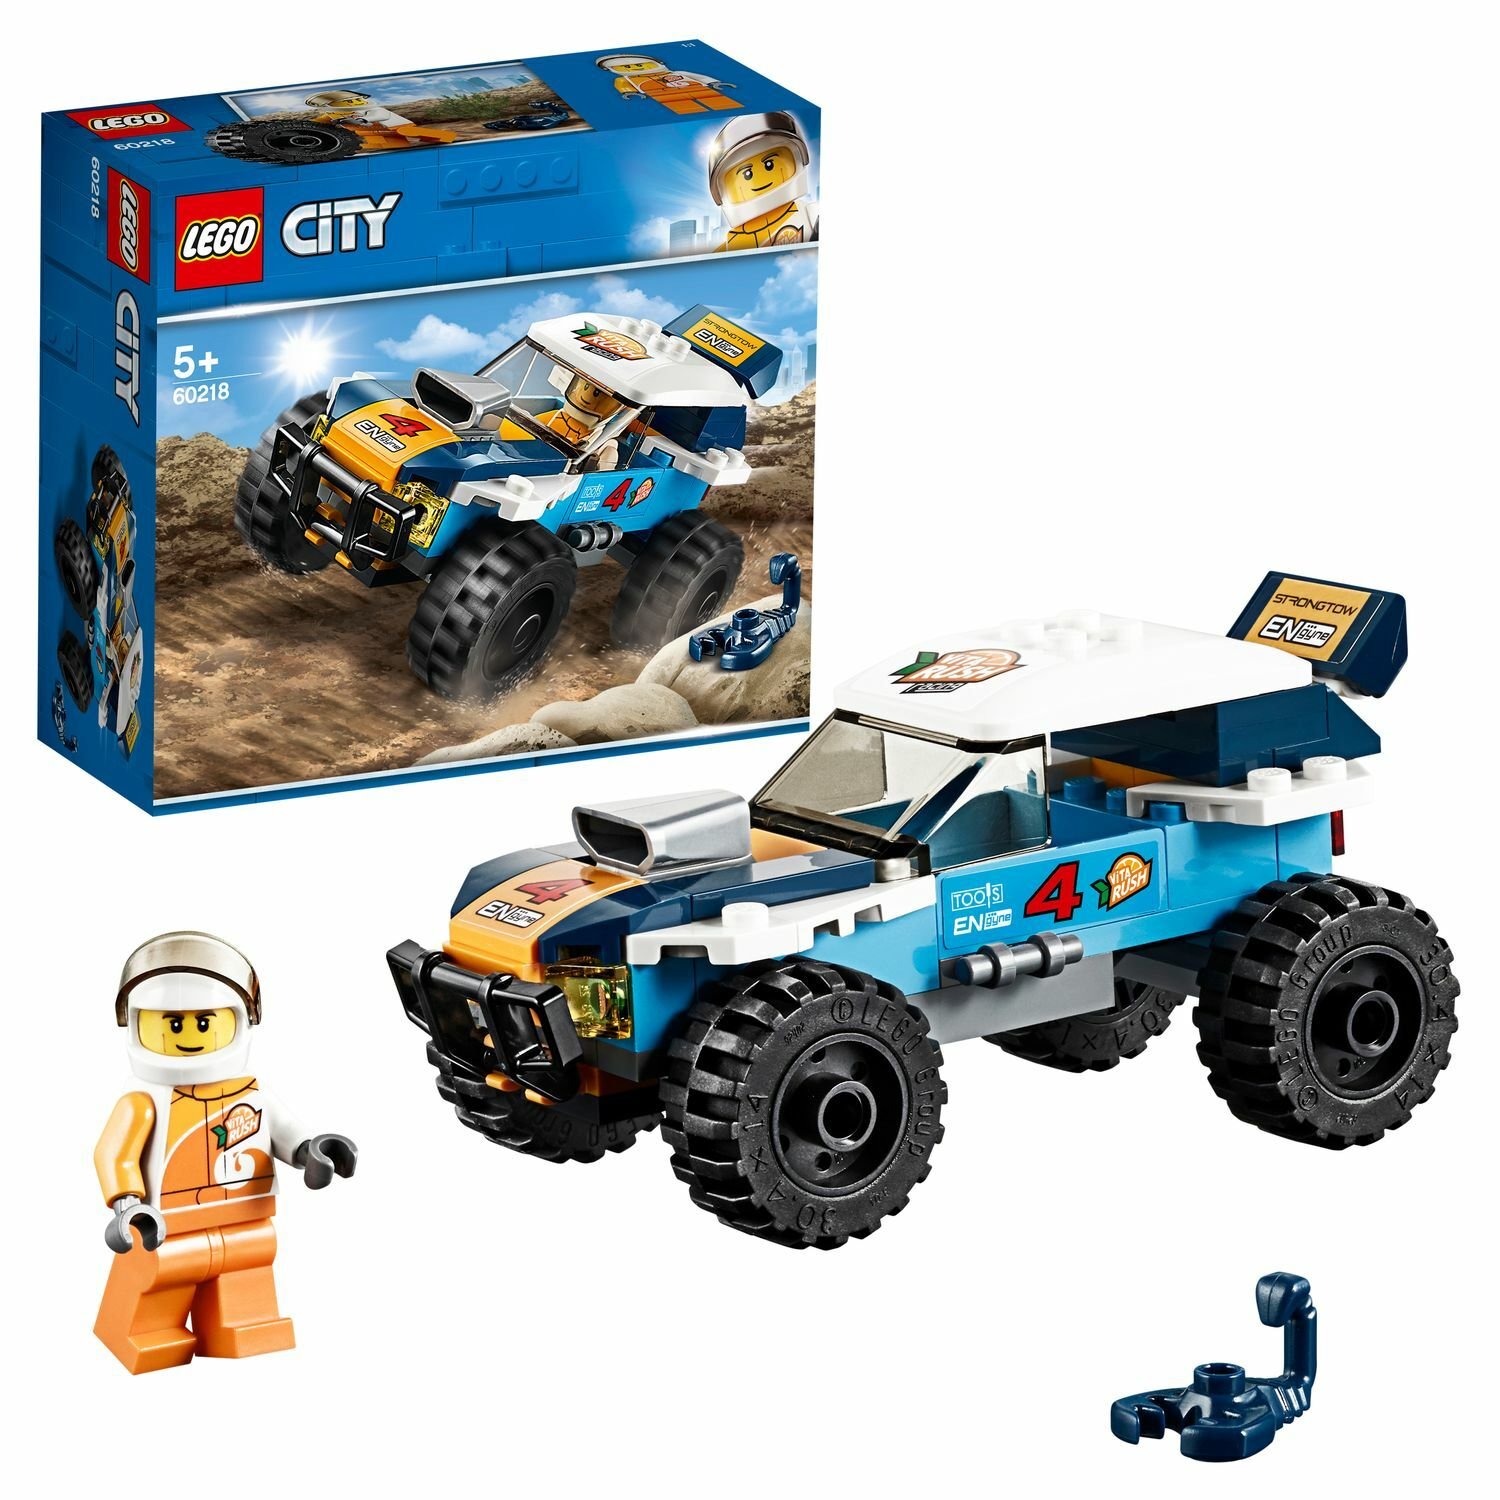 Конструктор LEGO City Great Vehicles Участник гонки в пустыне 60218 - фото 1